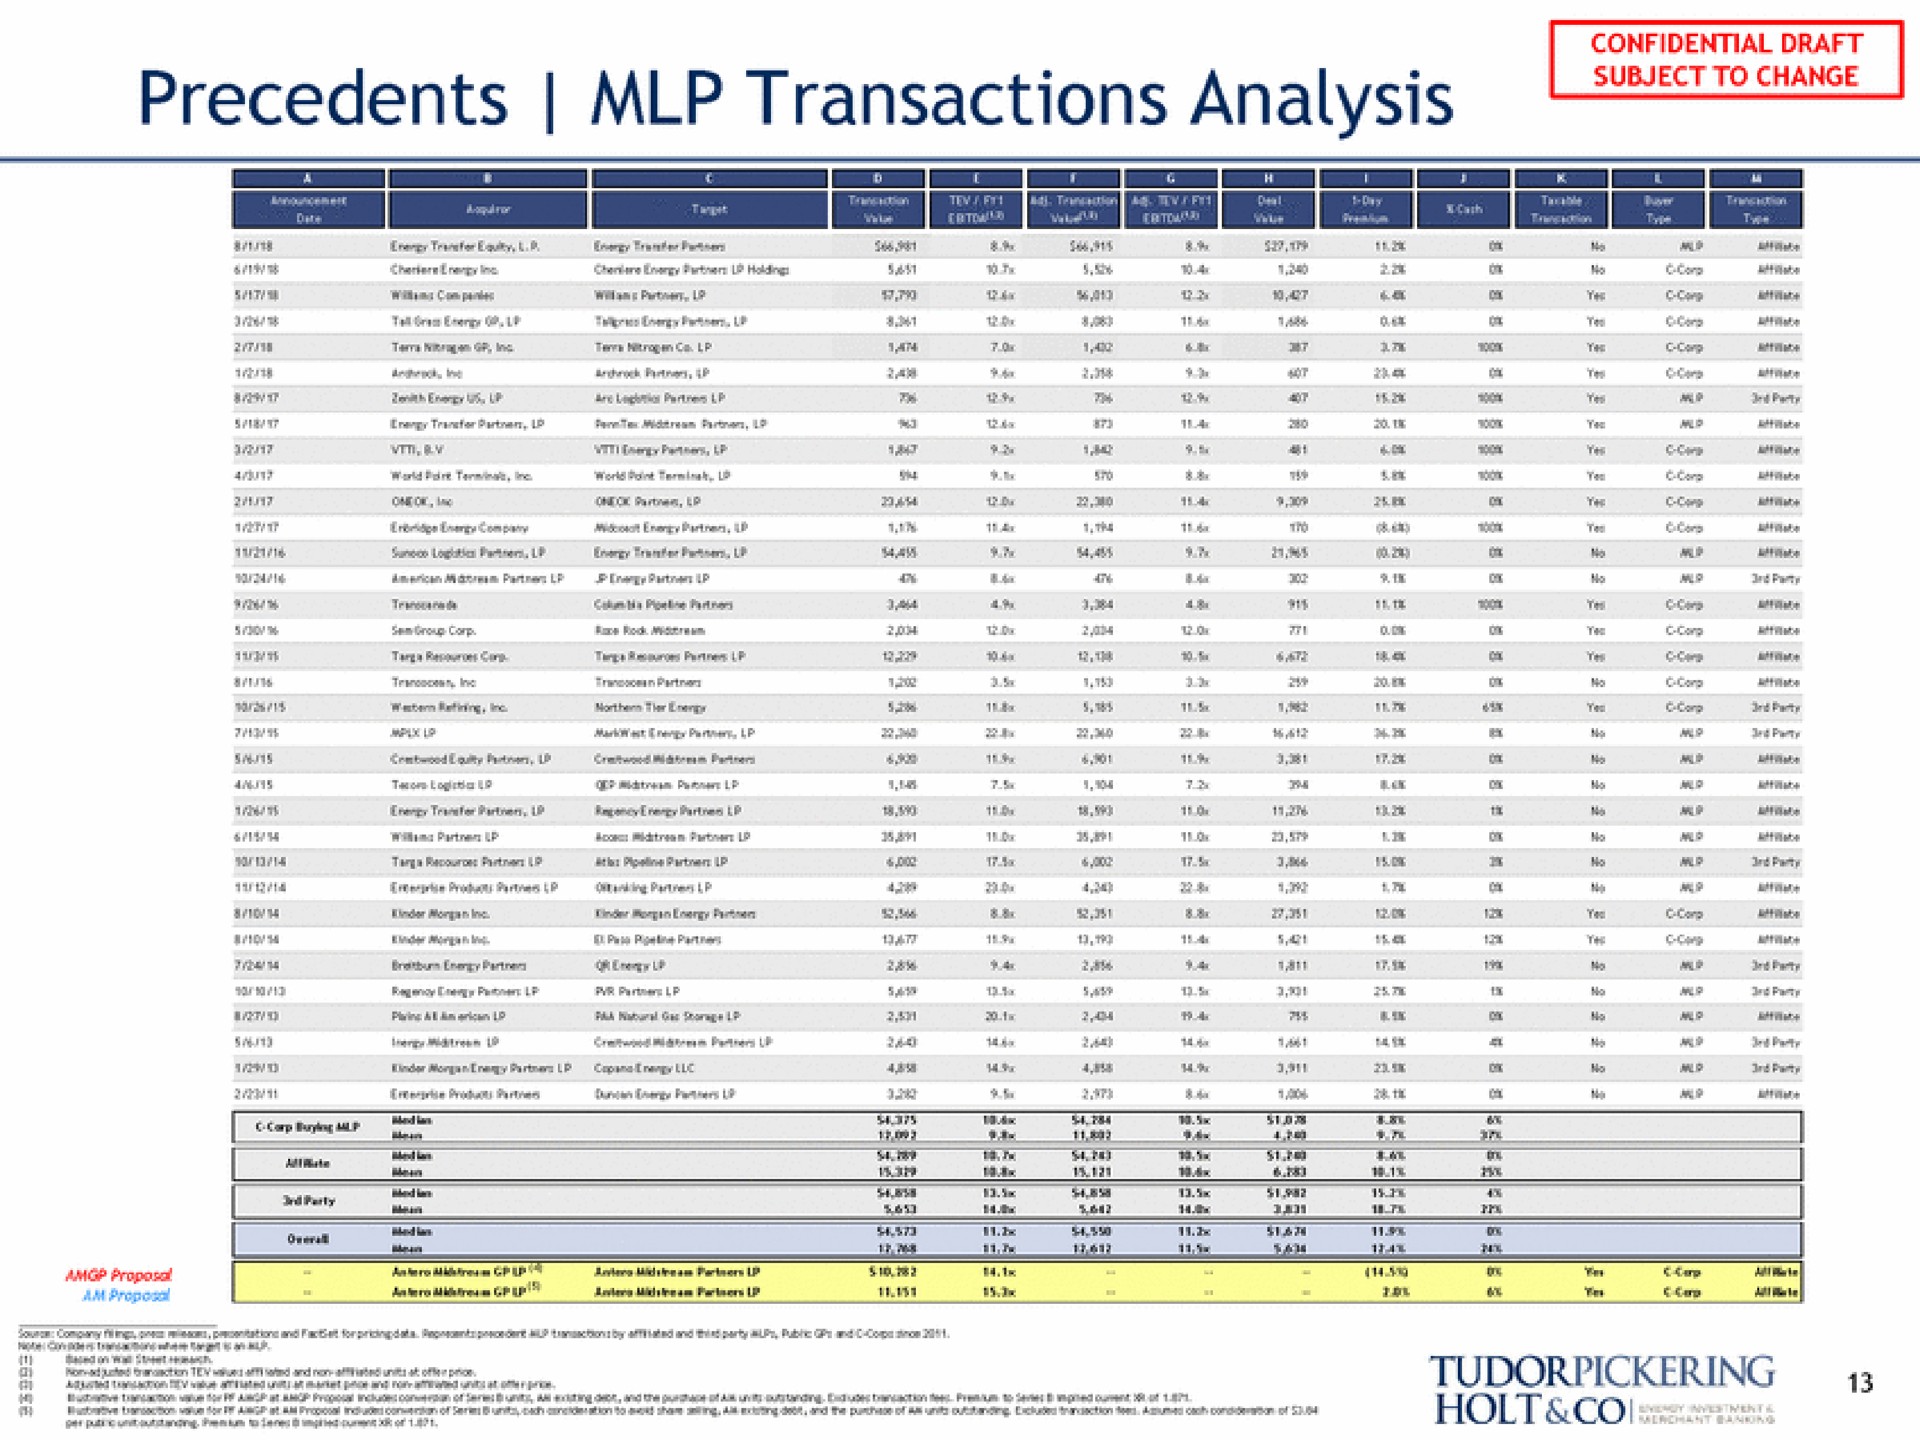 hic transactions analysis | Tudor, Pickering, Holt & Co